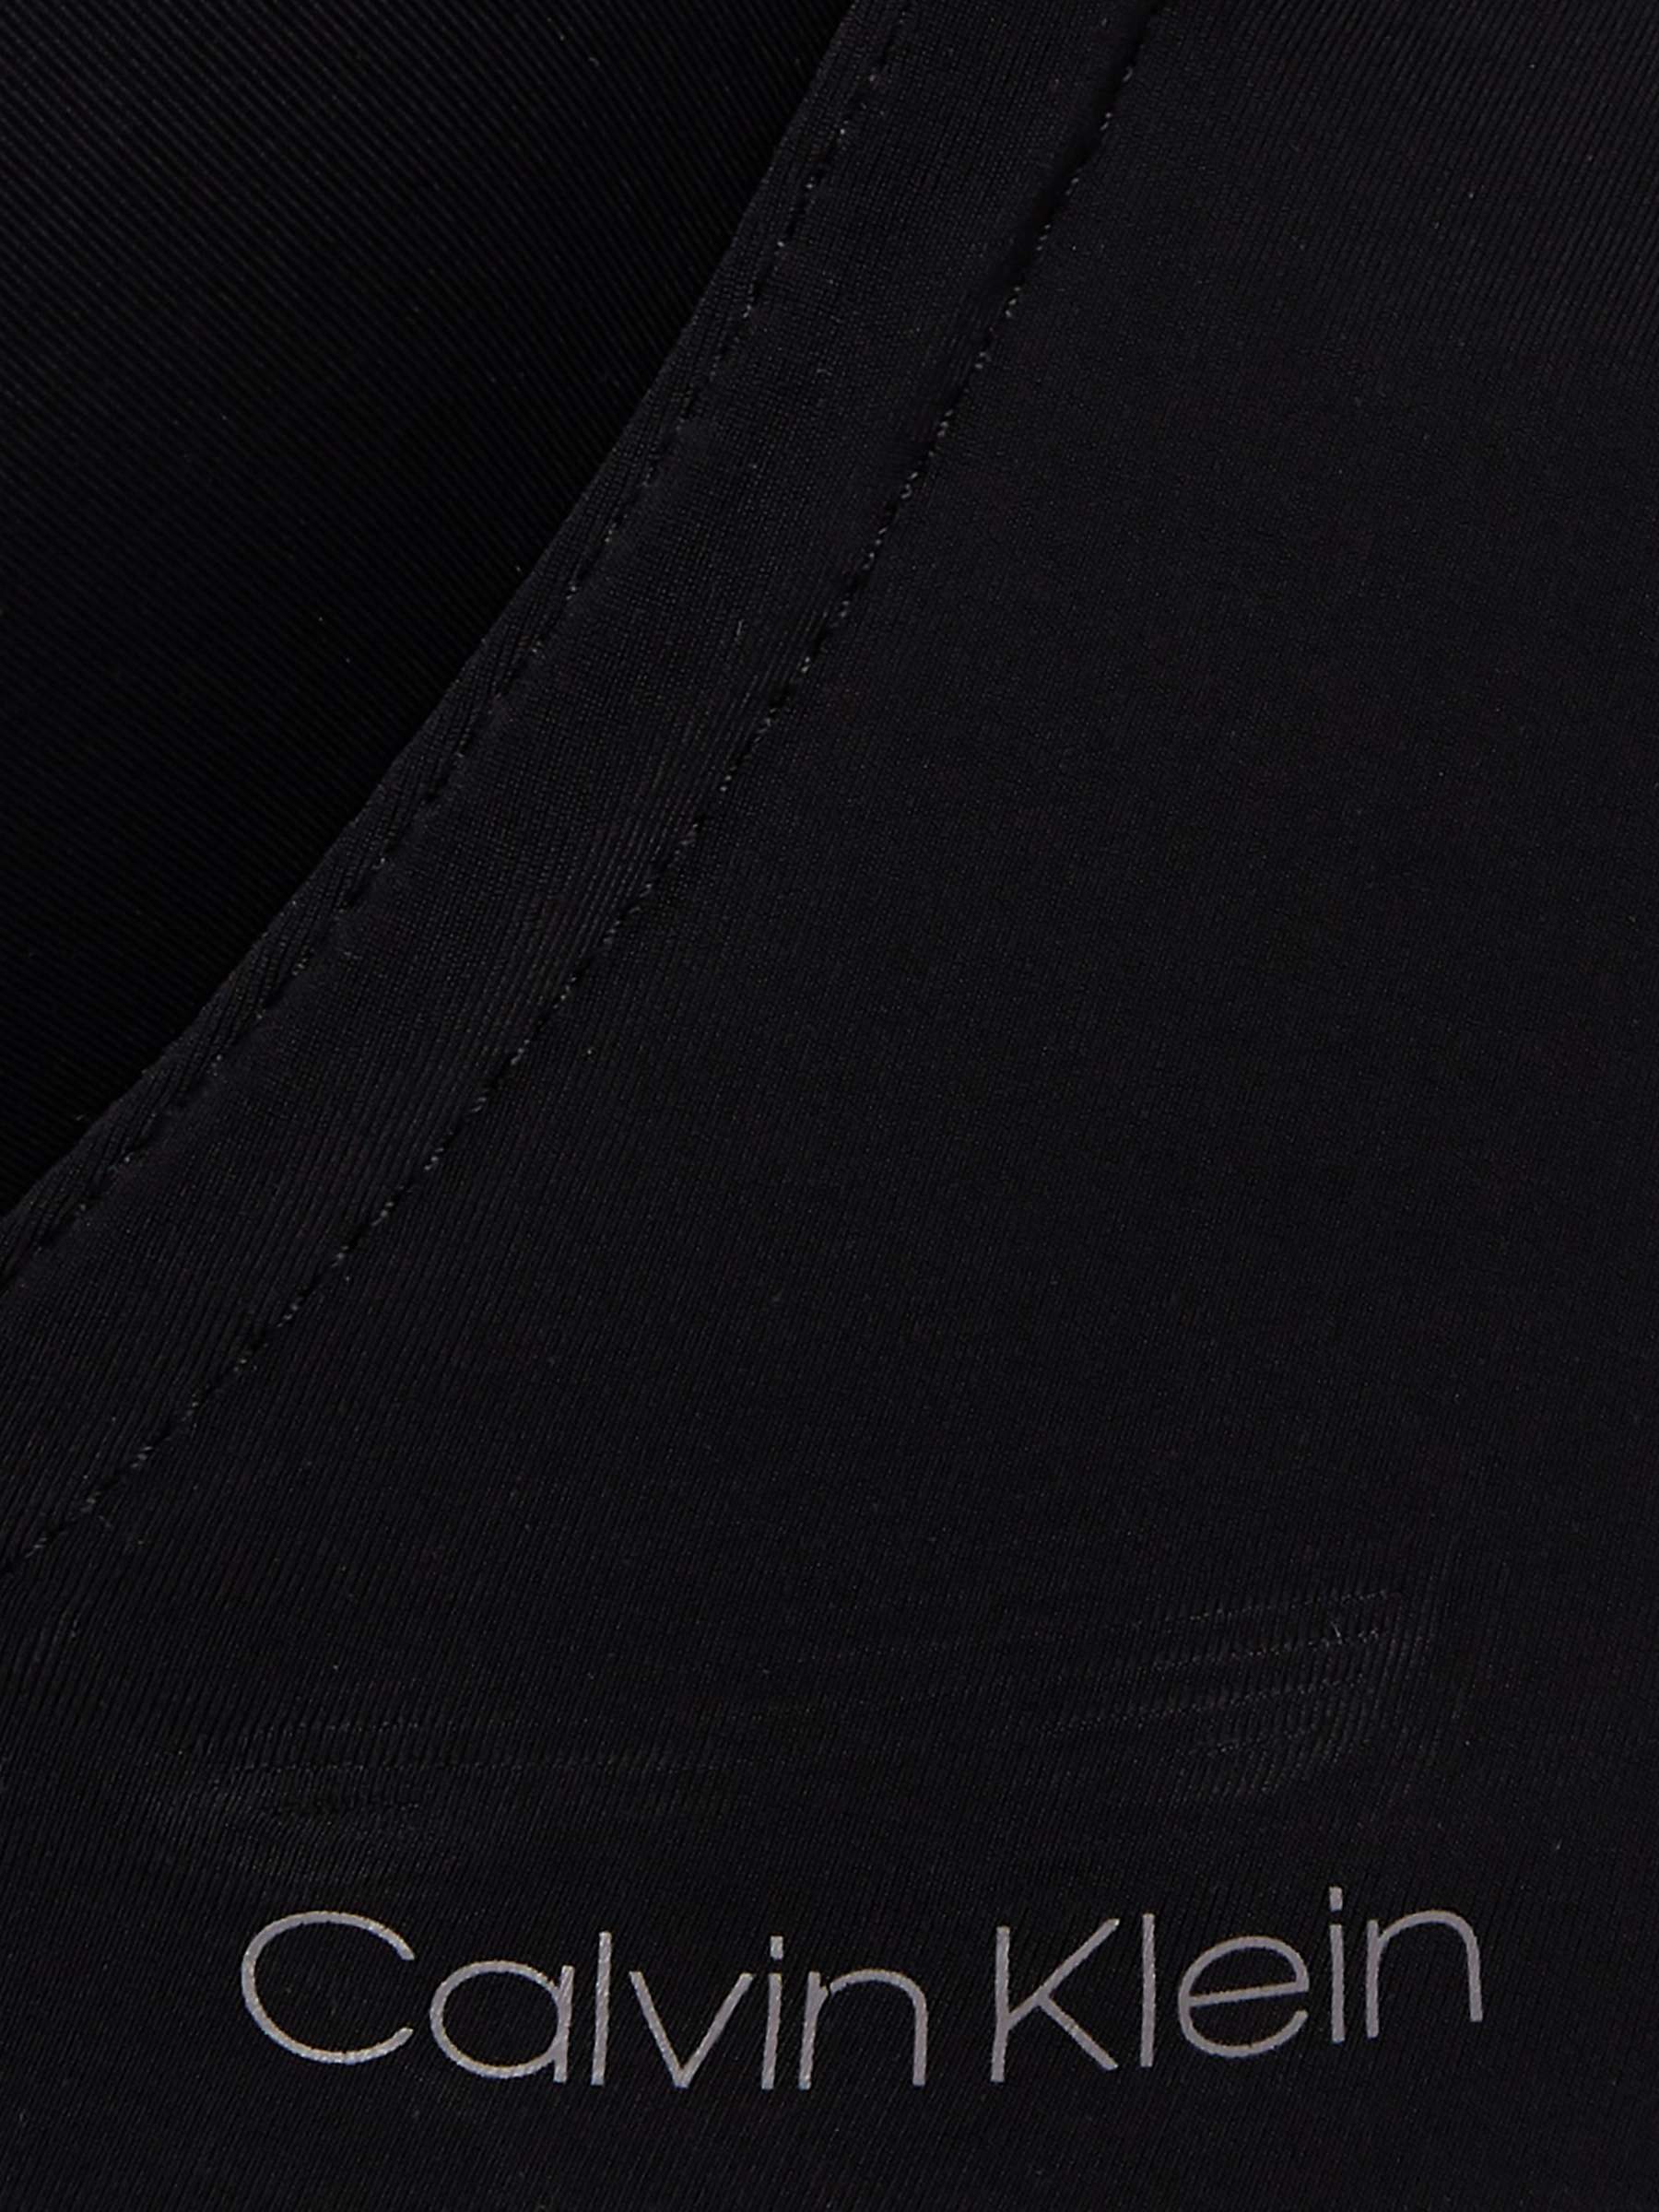 Buy Calvin Klein Seductive Comfort Lift Demi Bra Online at johnlewis.com